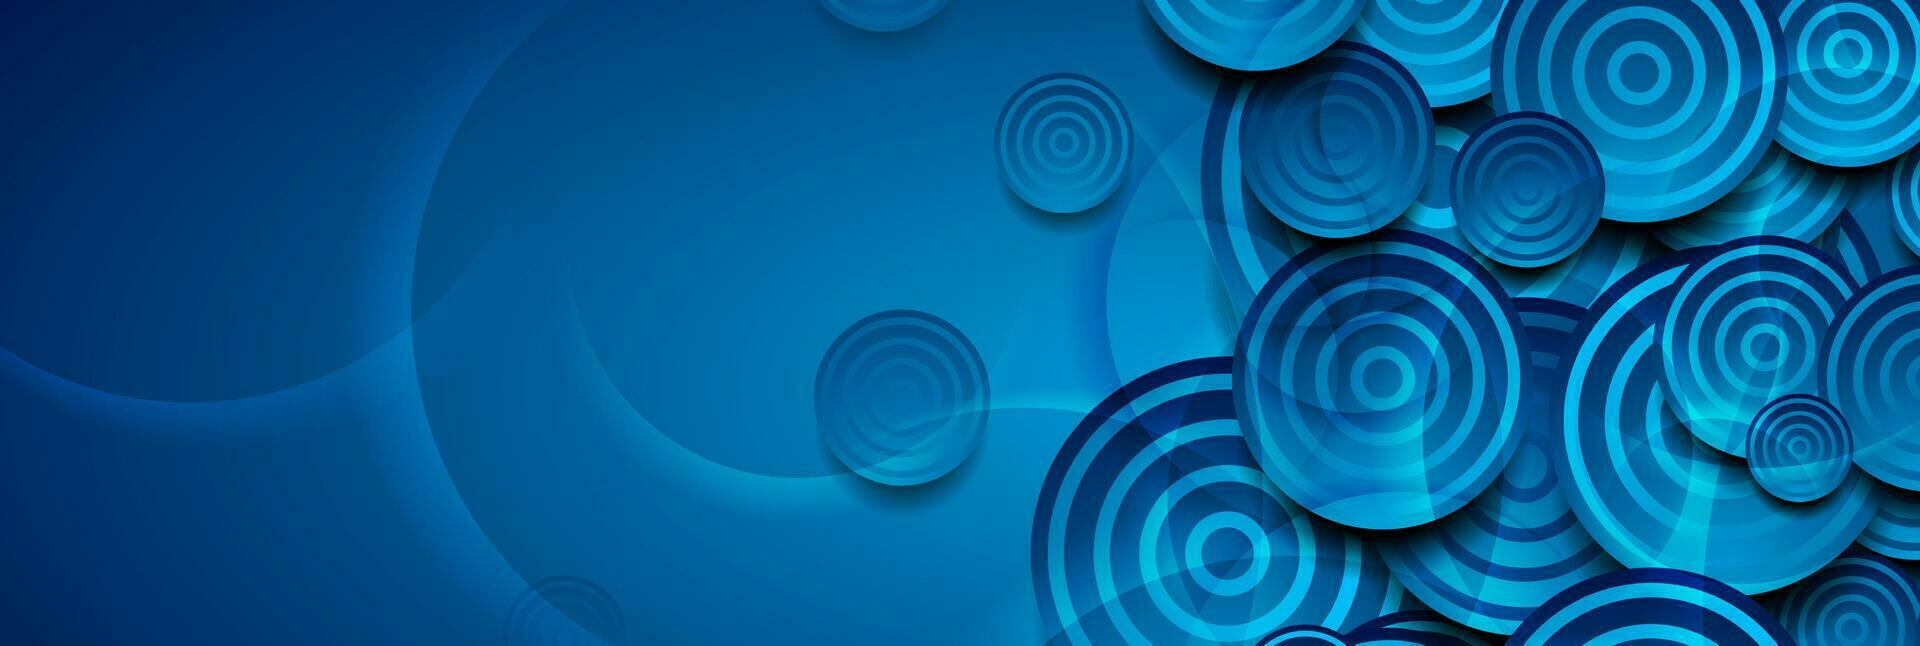 azul lustroso círculos e argolas abstrato geométrico fundo vetor